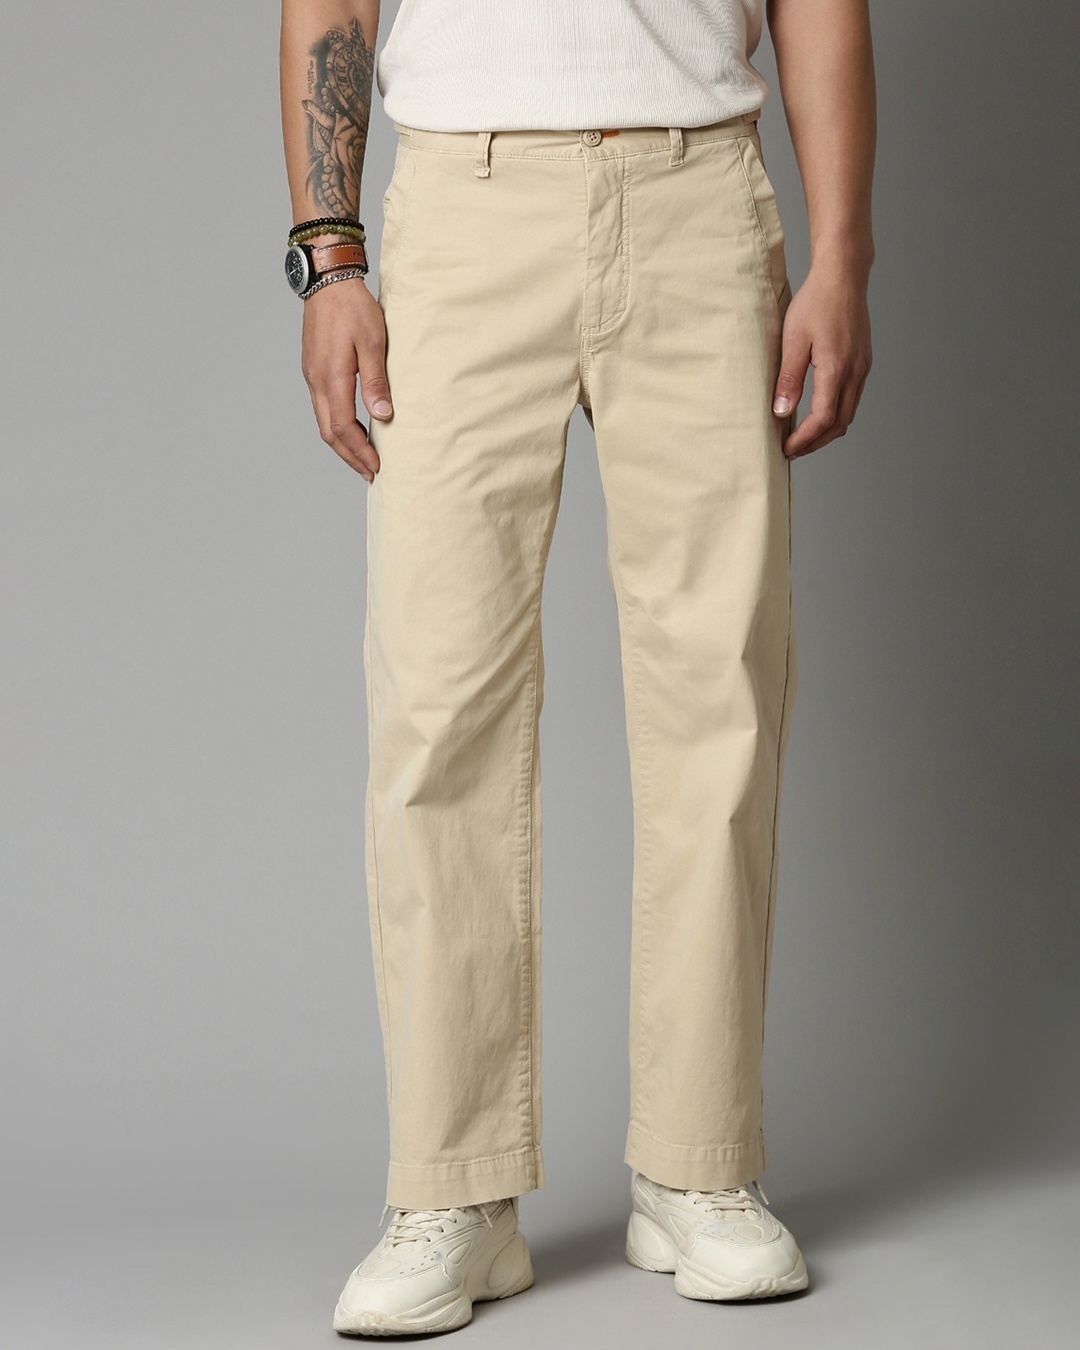 Buy Men's Beige Straight Fit Trousers Online at Bewakoof